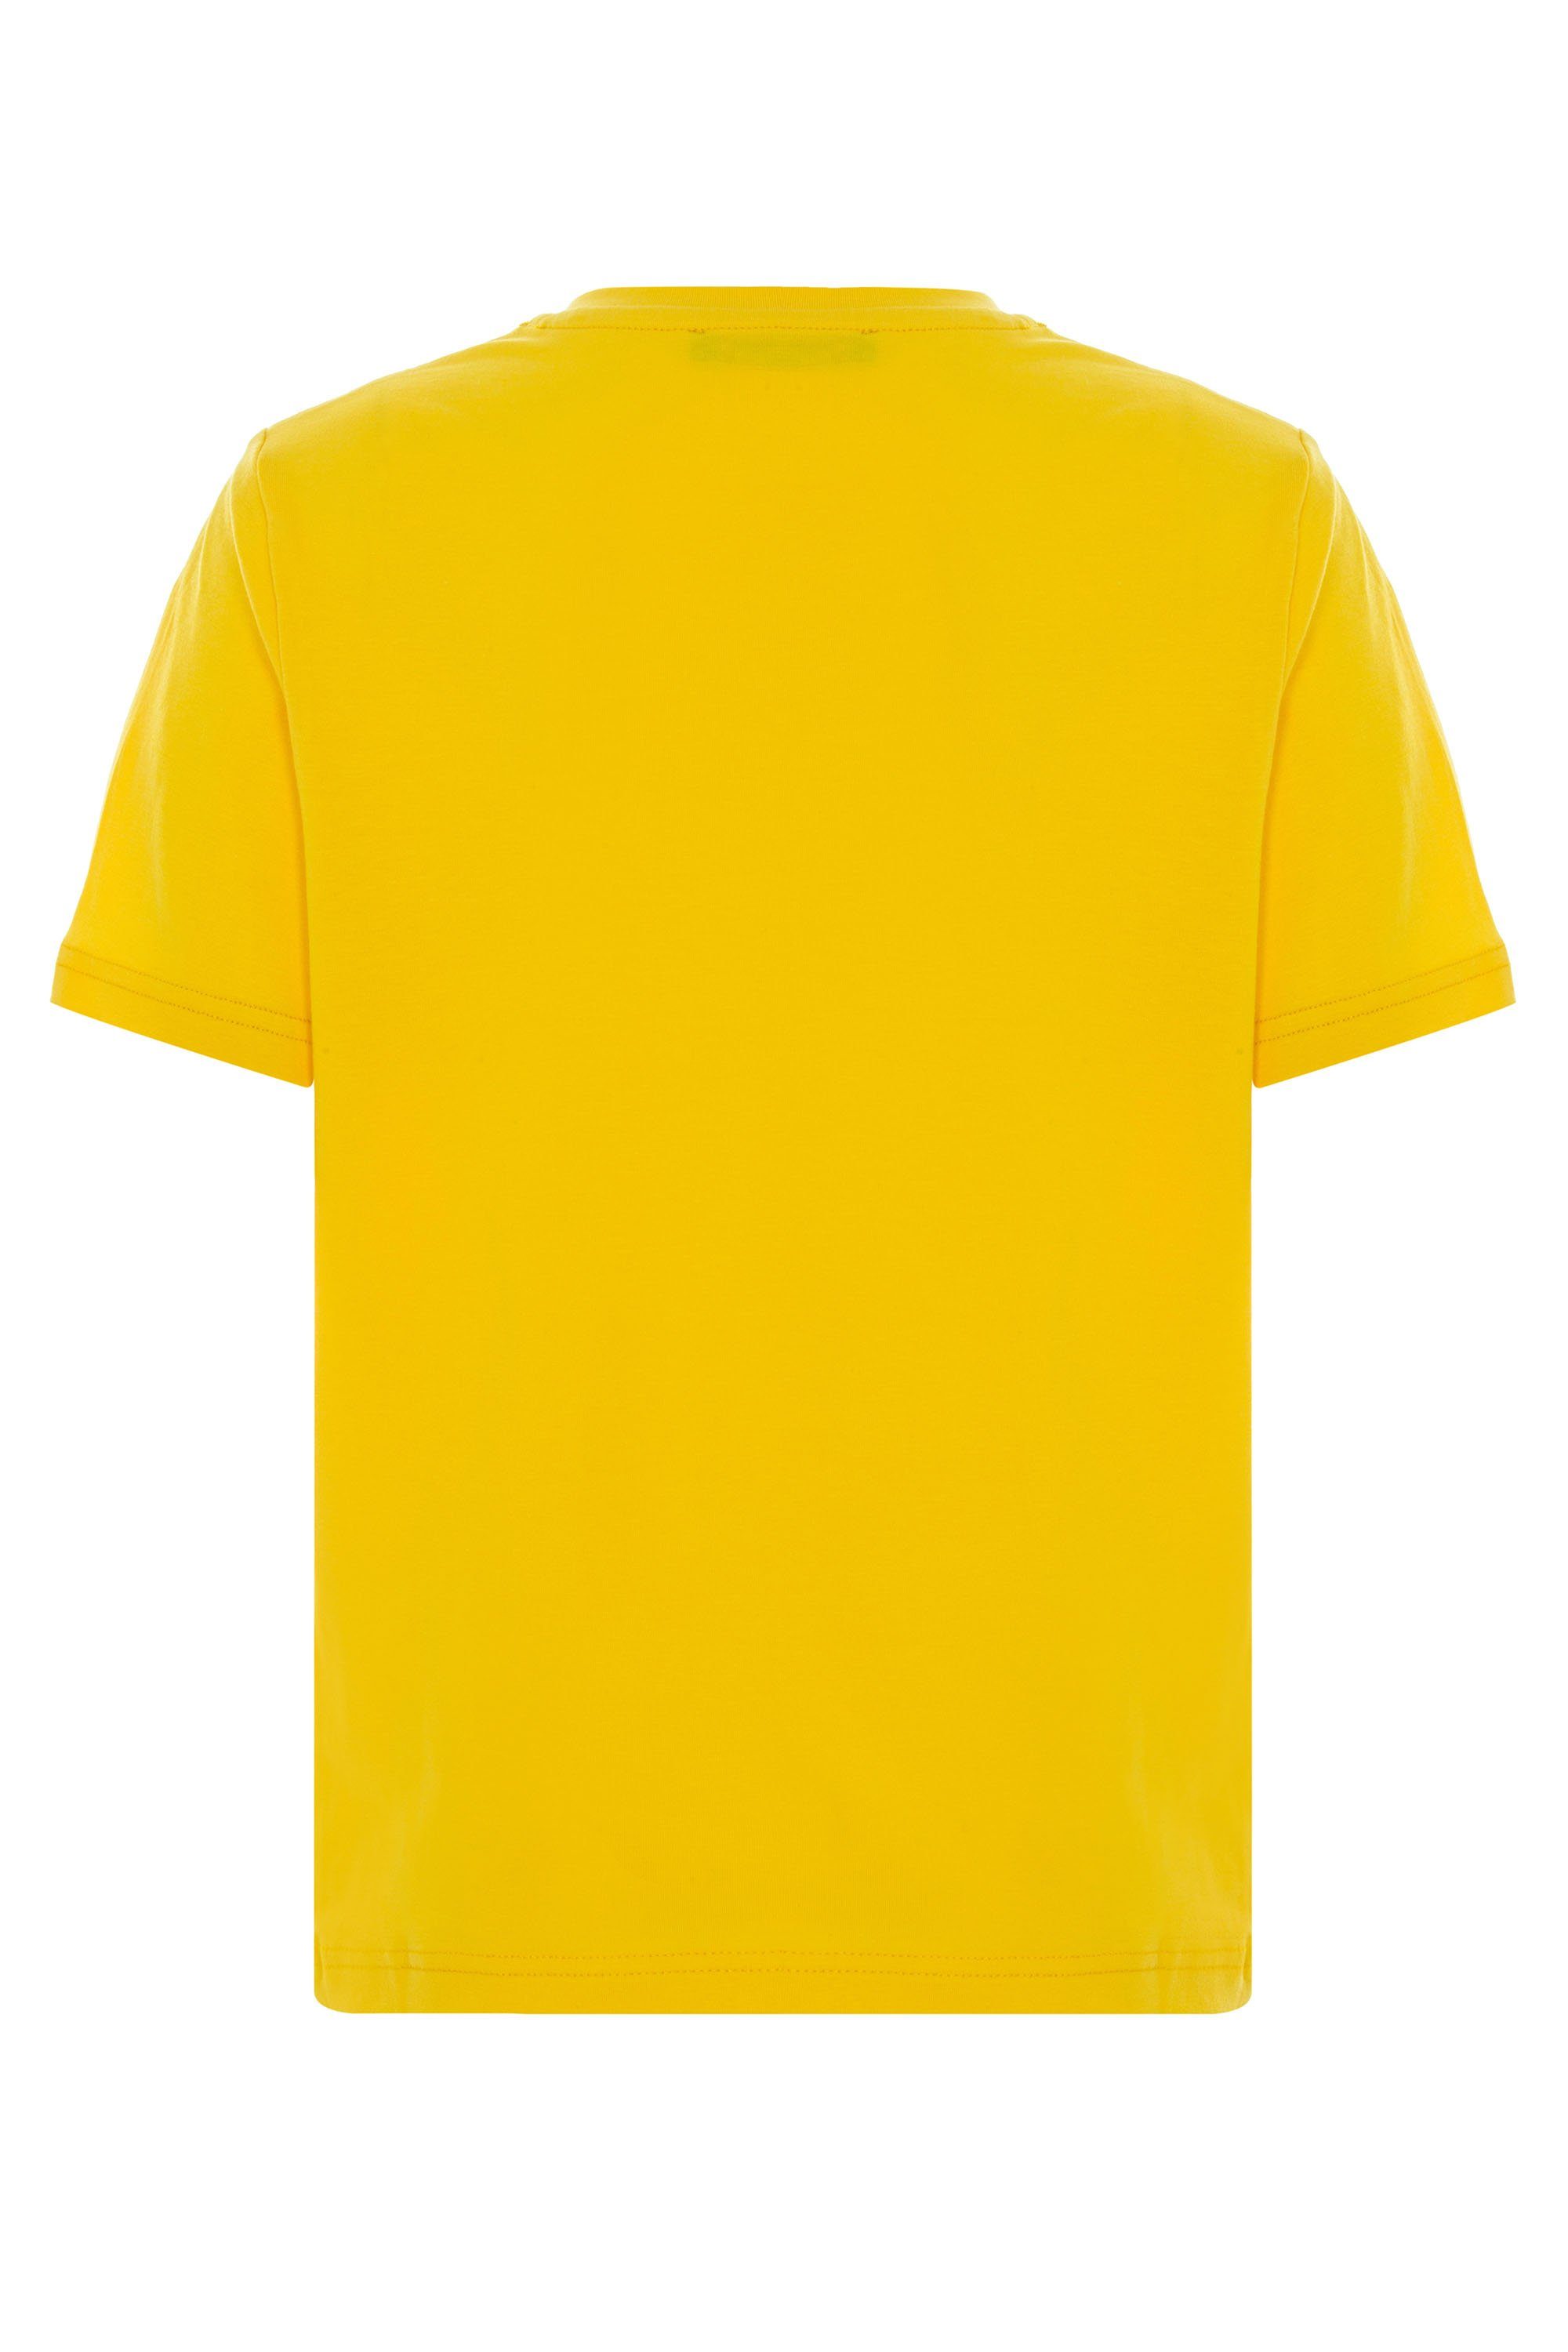 Cipo & Baxx coolem gelb-schwarz mit T-Shirt Print